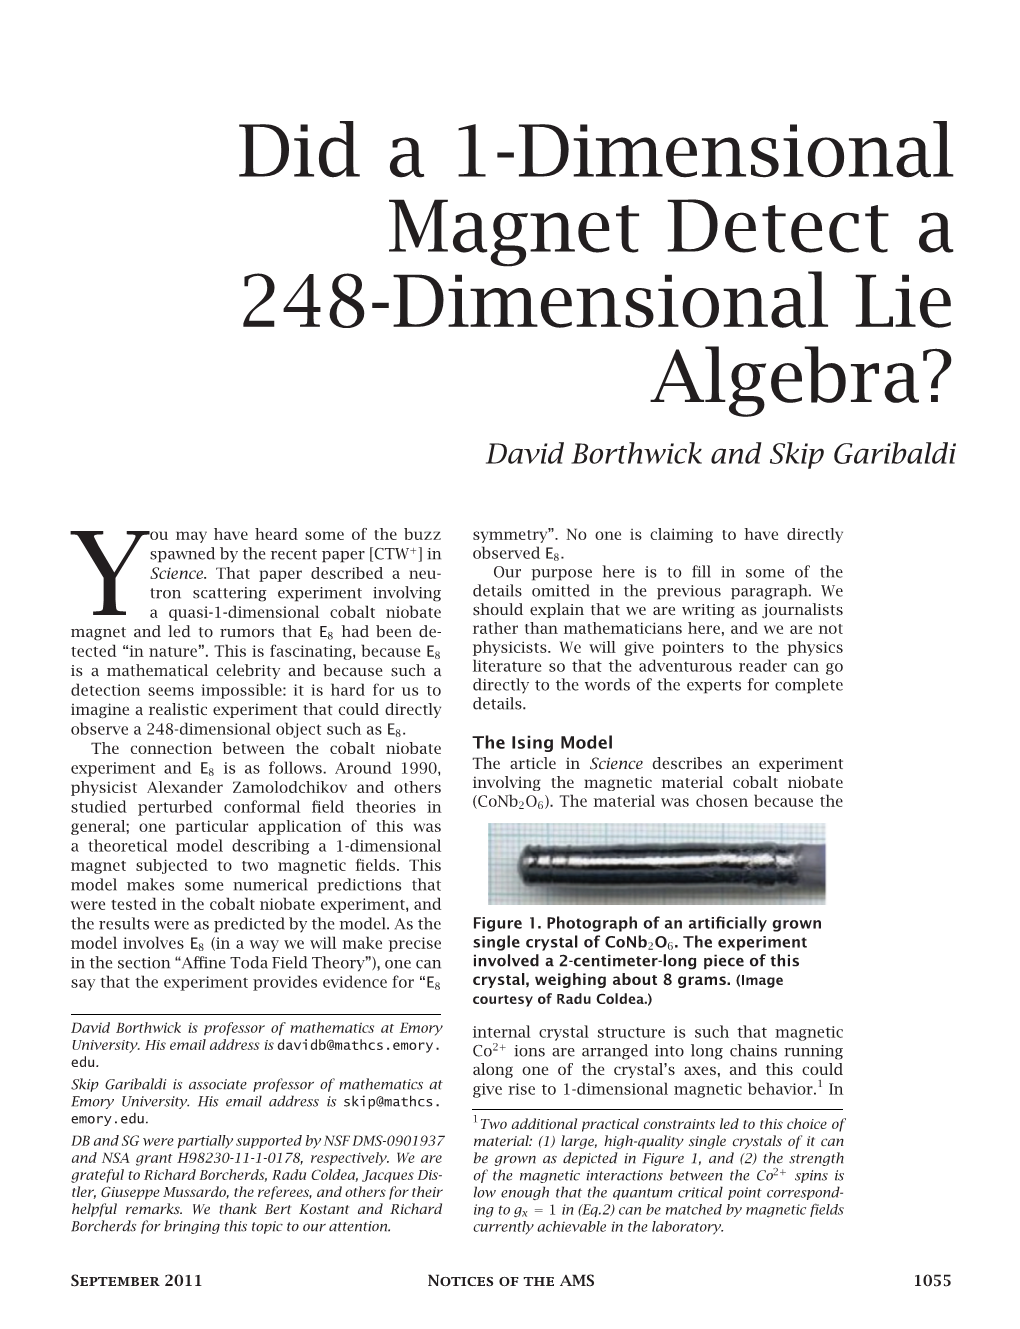 Did a 1-Dimensional Magnet Detect a 248-Dimensional Lie Algebra? David Borthwick and Skip Garibaldi